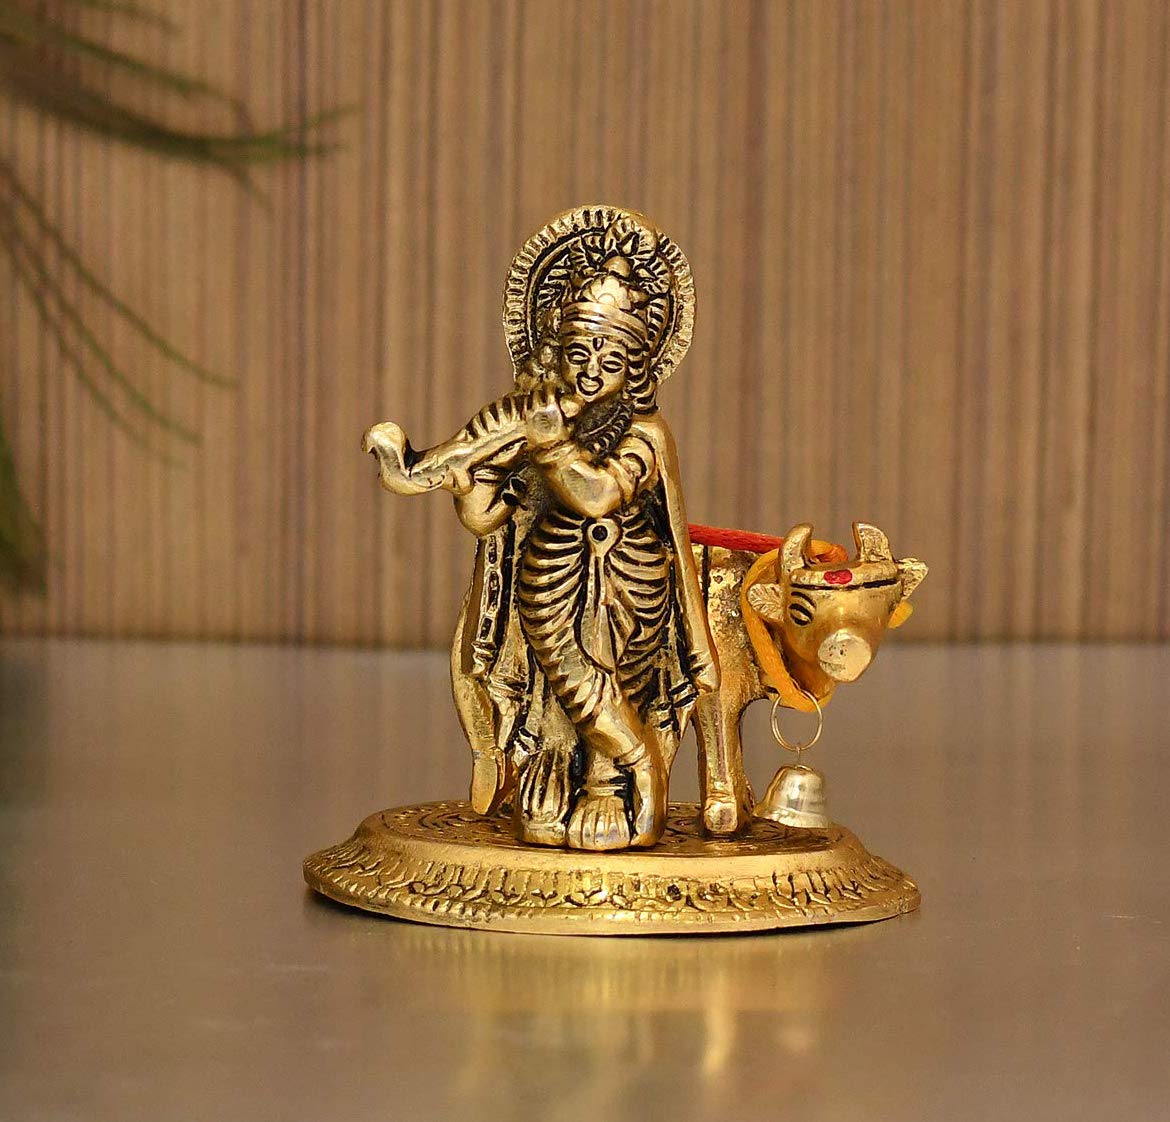 Buy CraftVatika Lord Krishna Idol Brass Decorative Showpiece